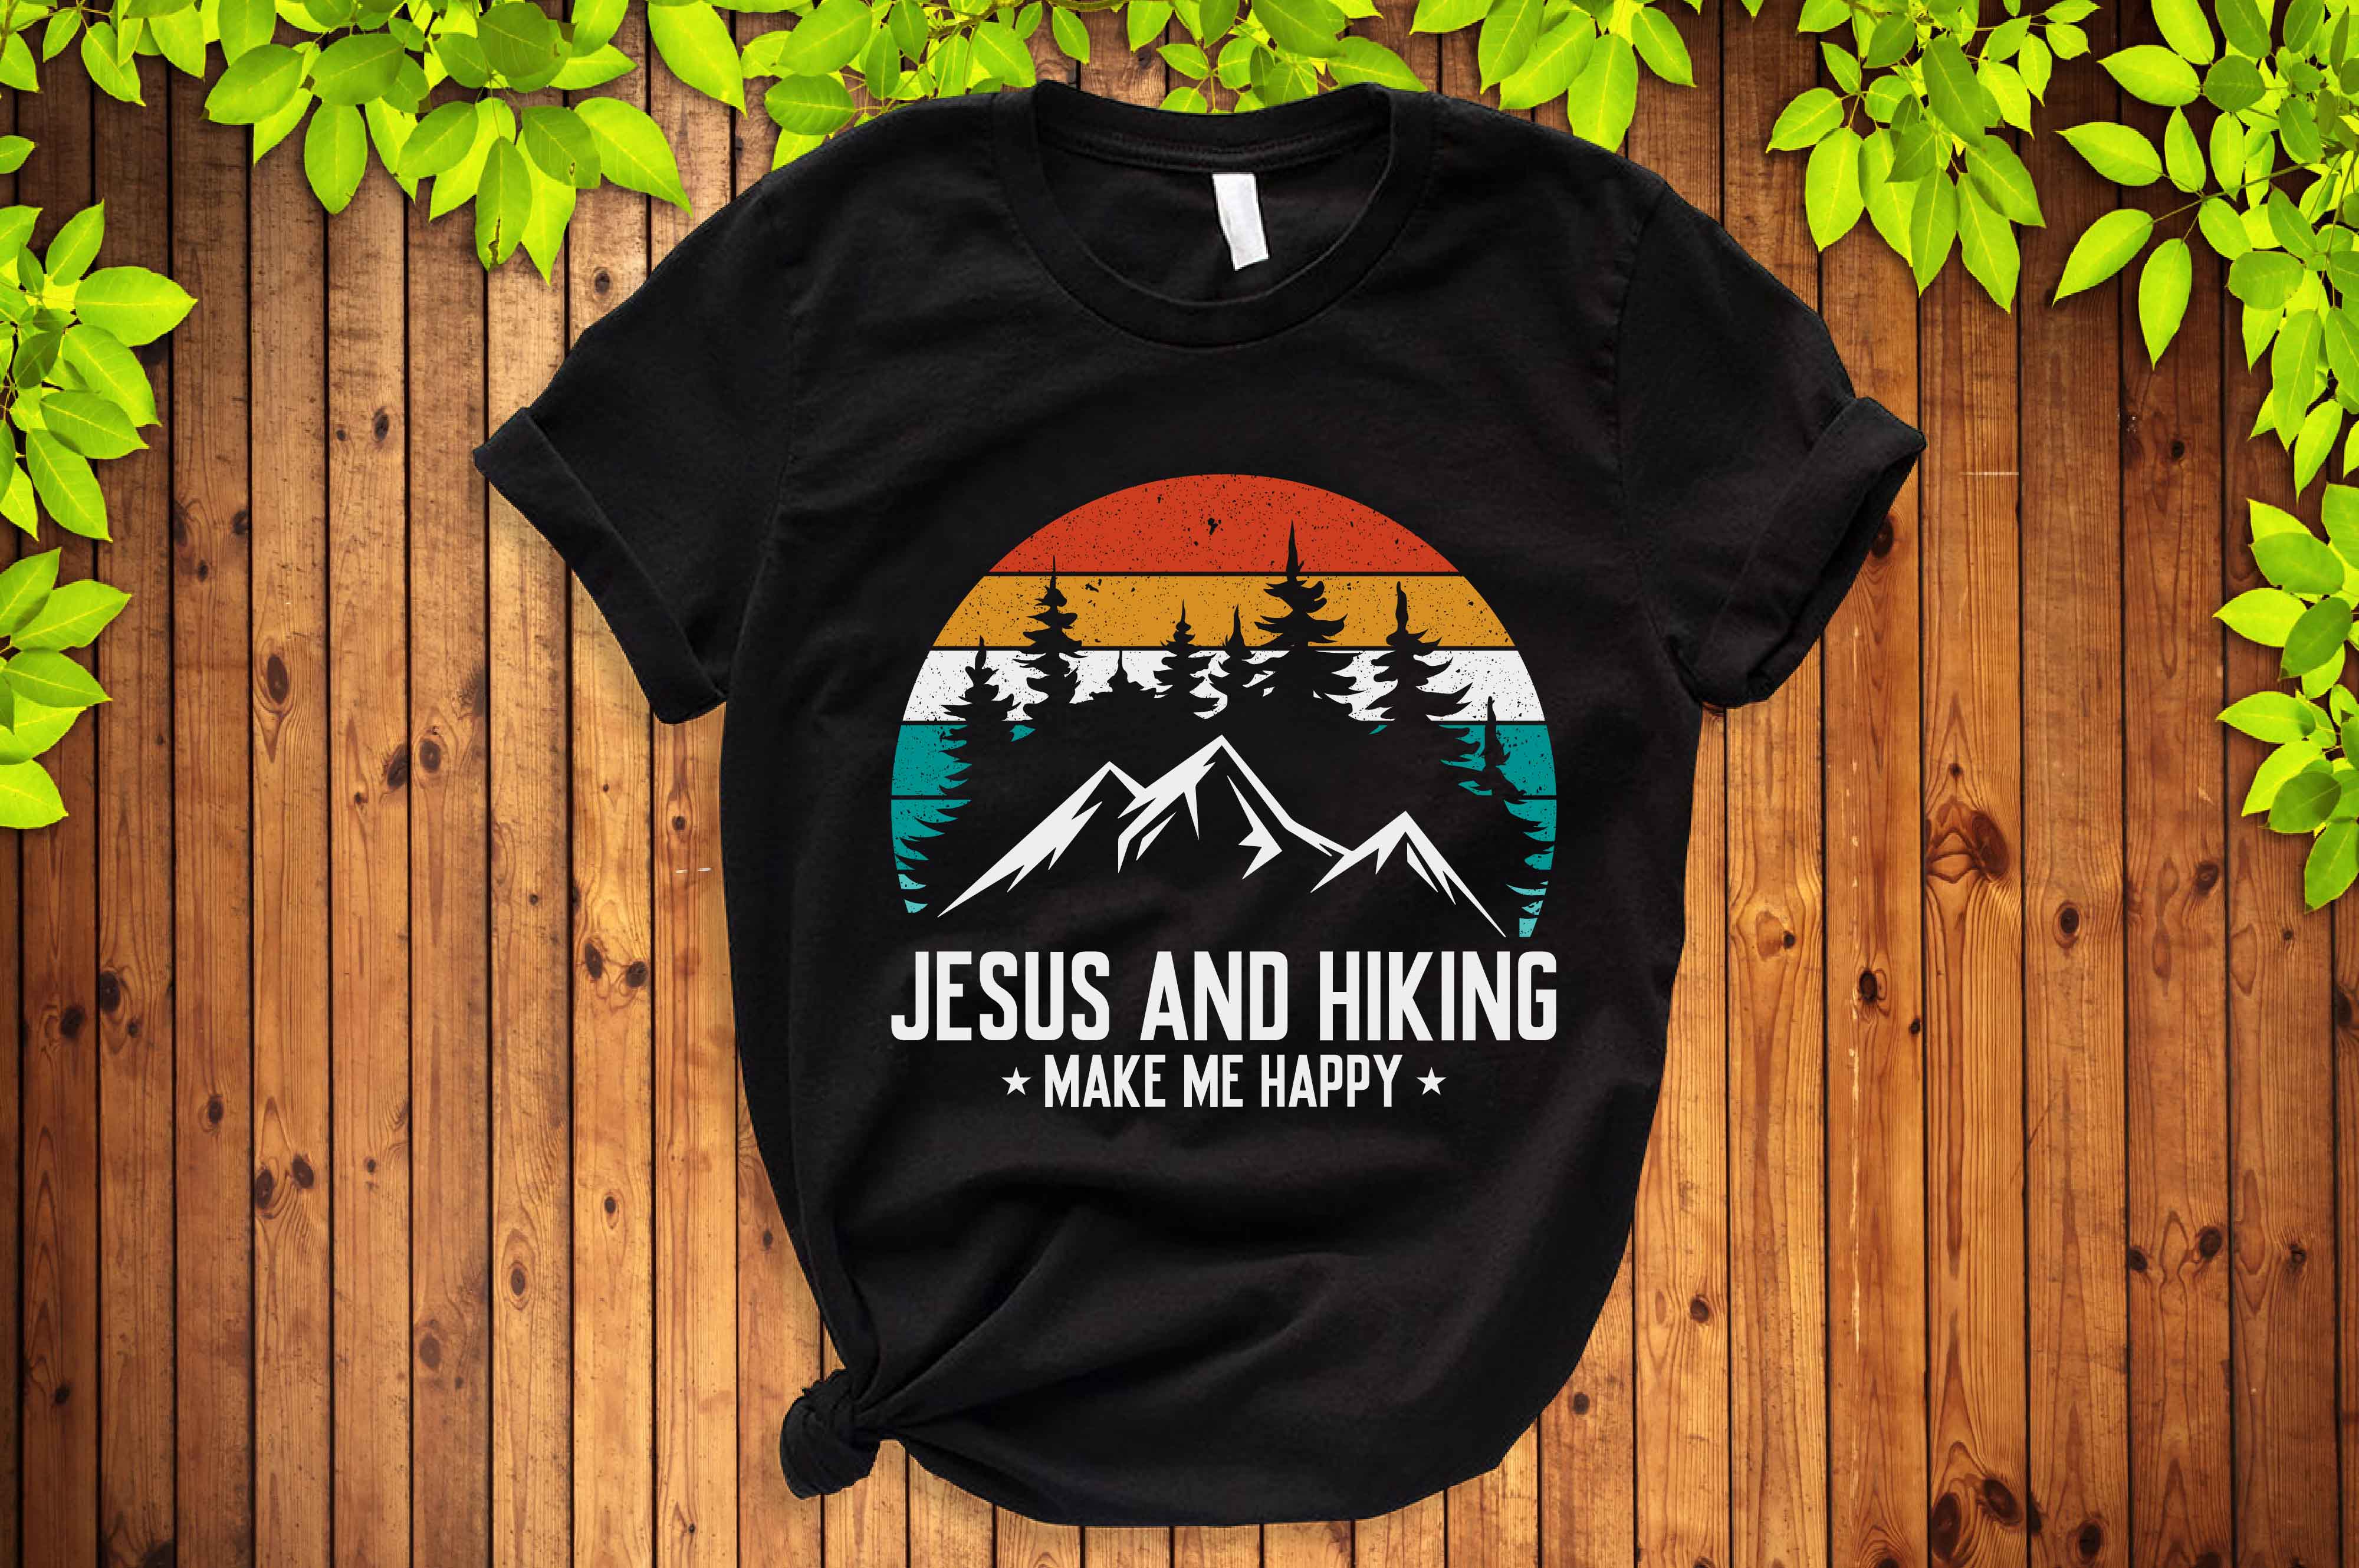 T - shirt that says jesus and hiking make me happy.